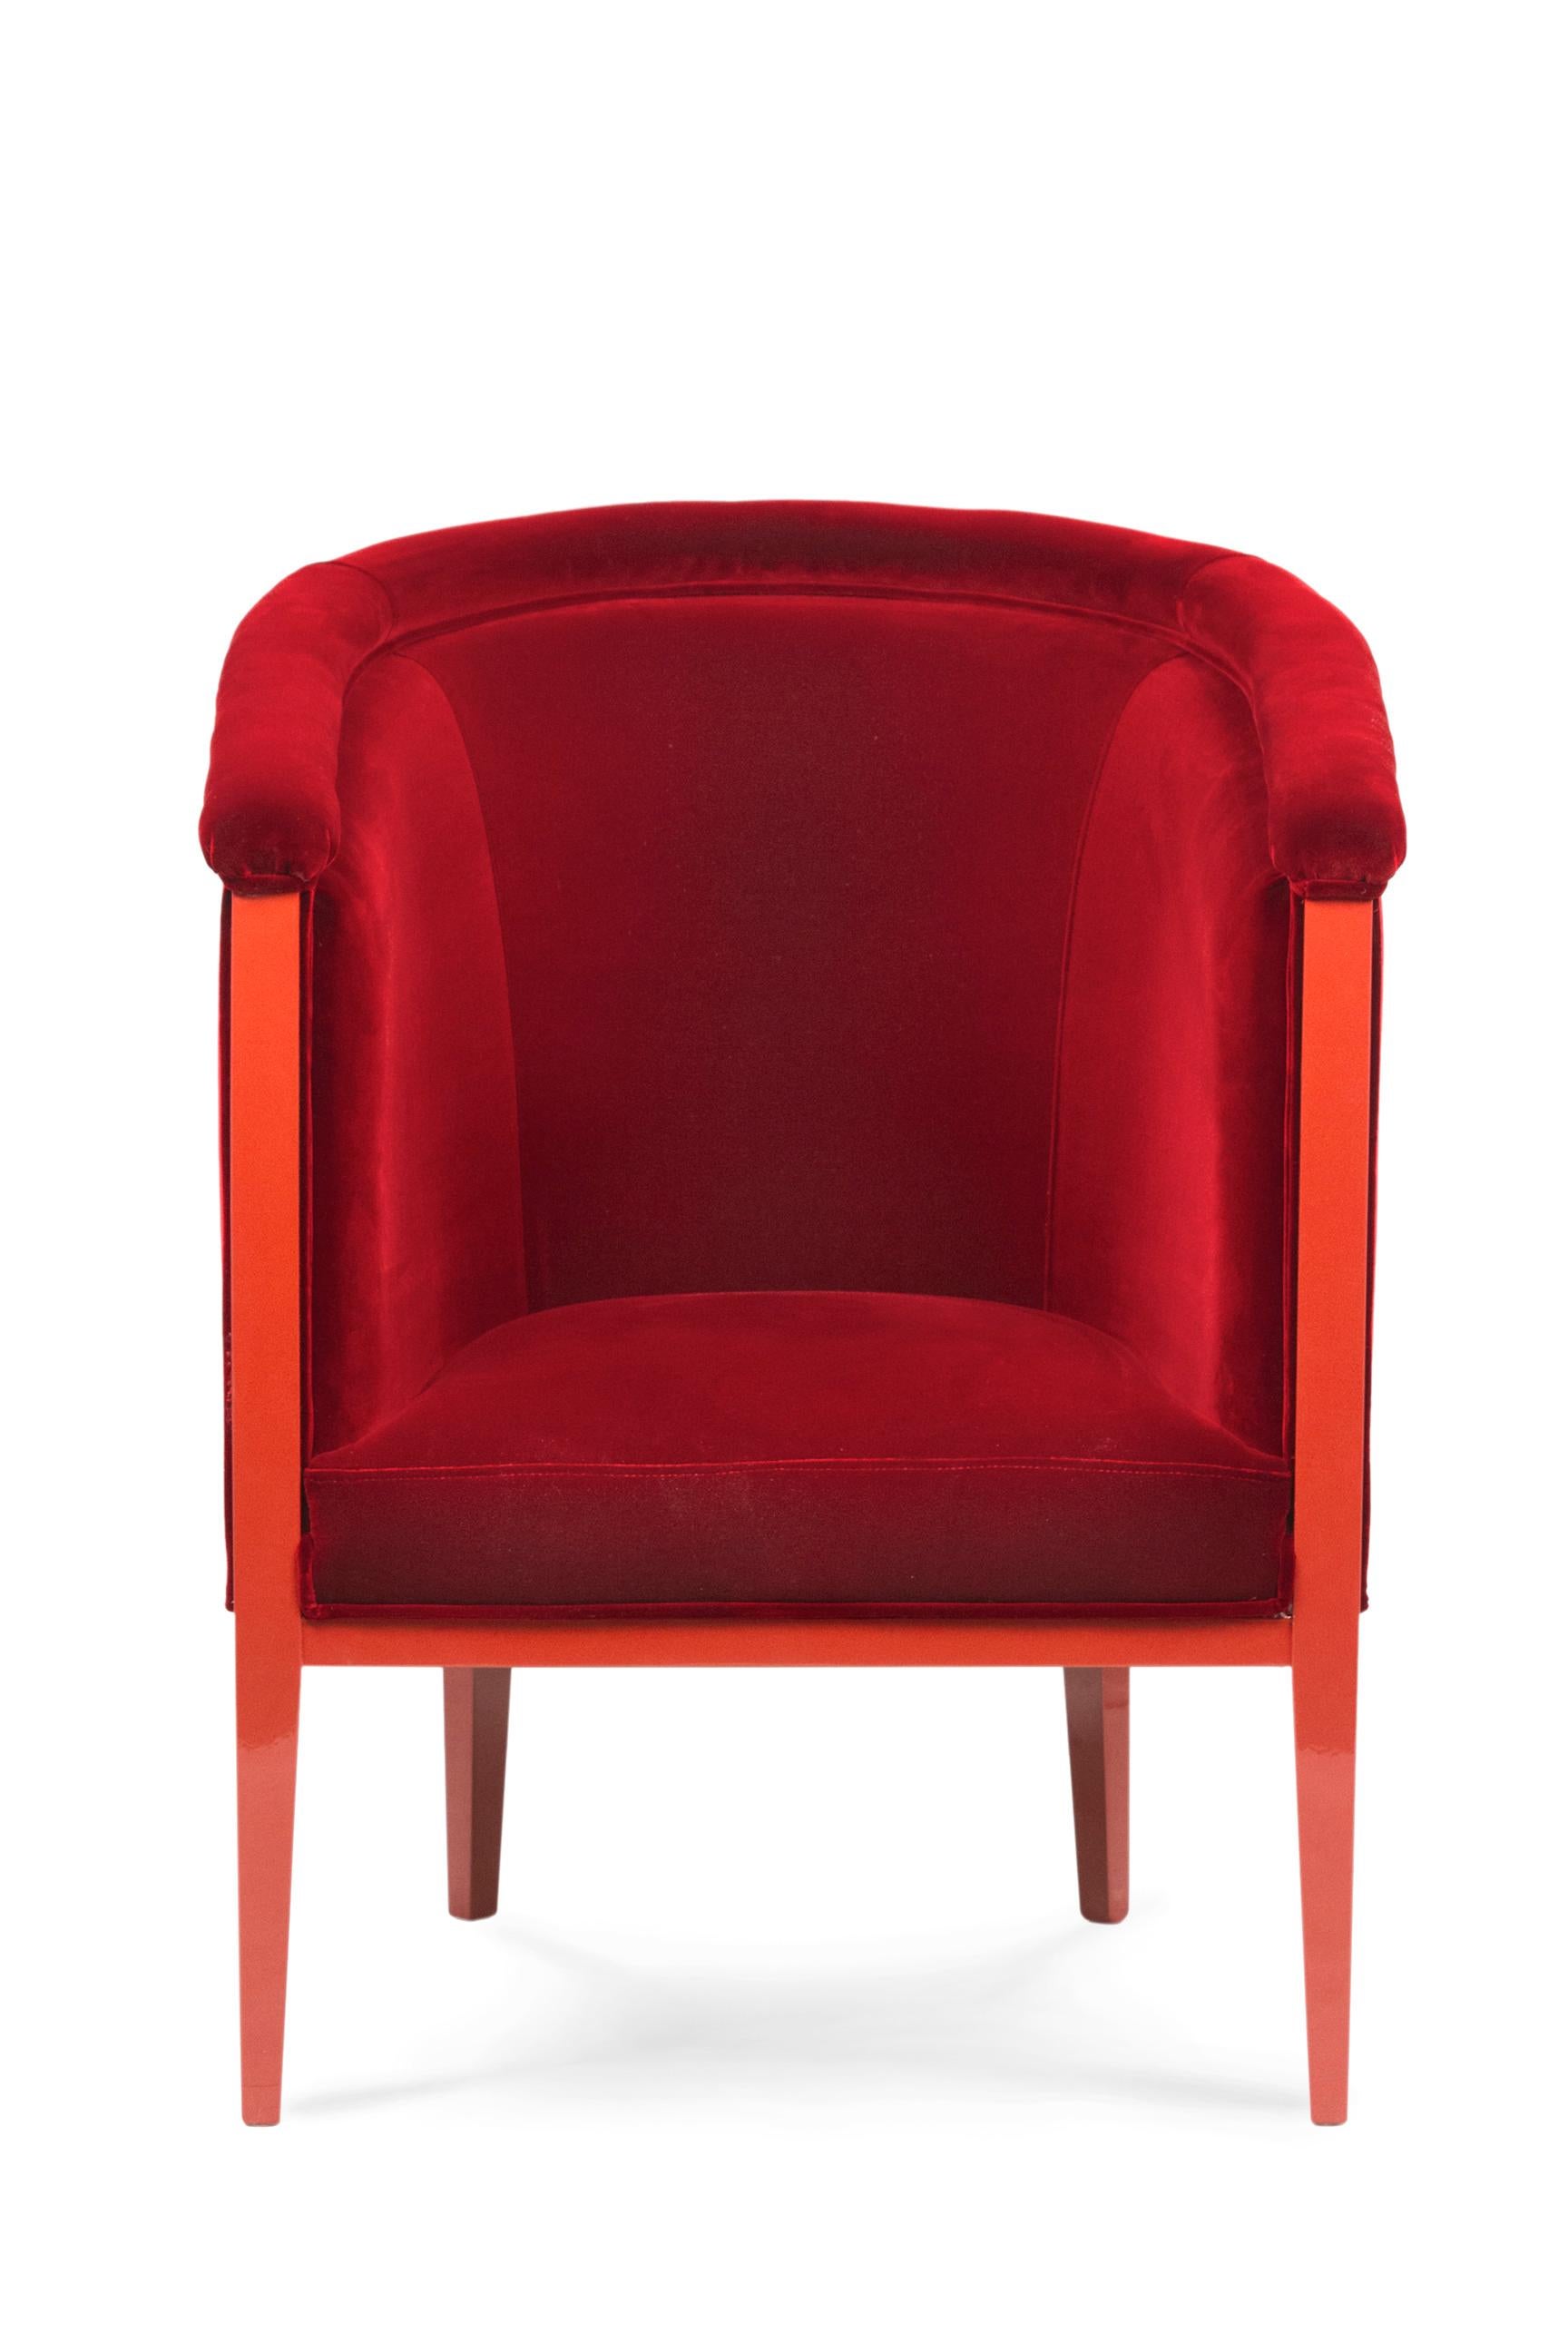 Contemporary Art Deco Scarlet Armchair DEDAR Red Cotton Velvet Handmade Portugal Greenapple For Sale